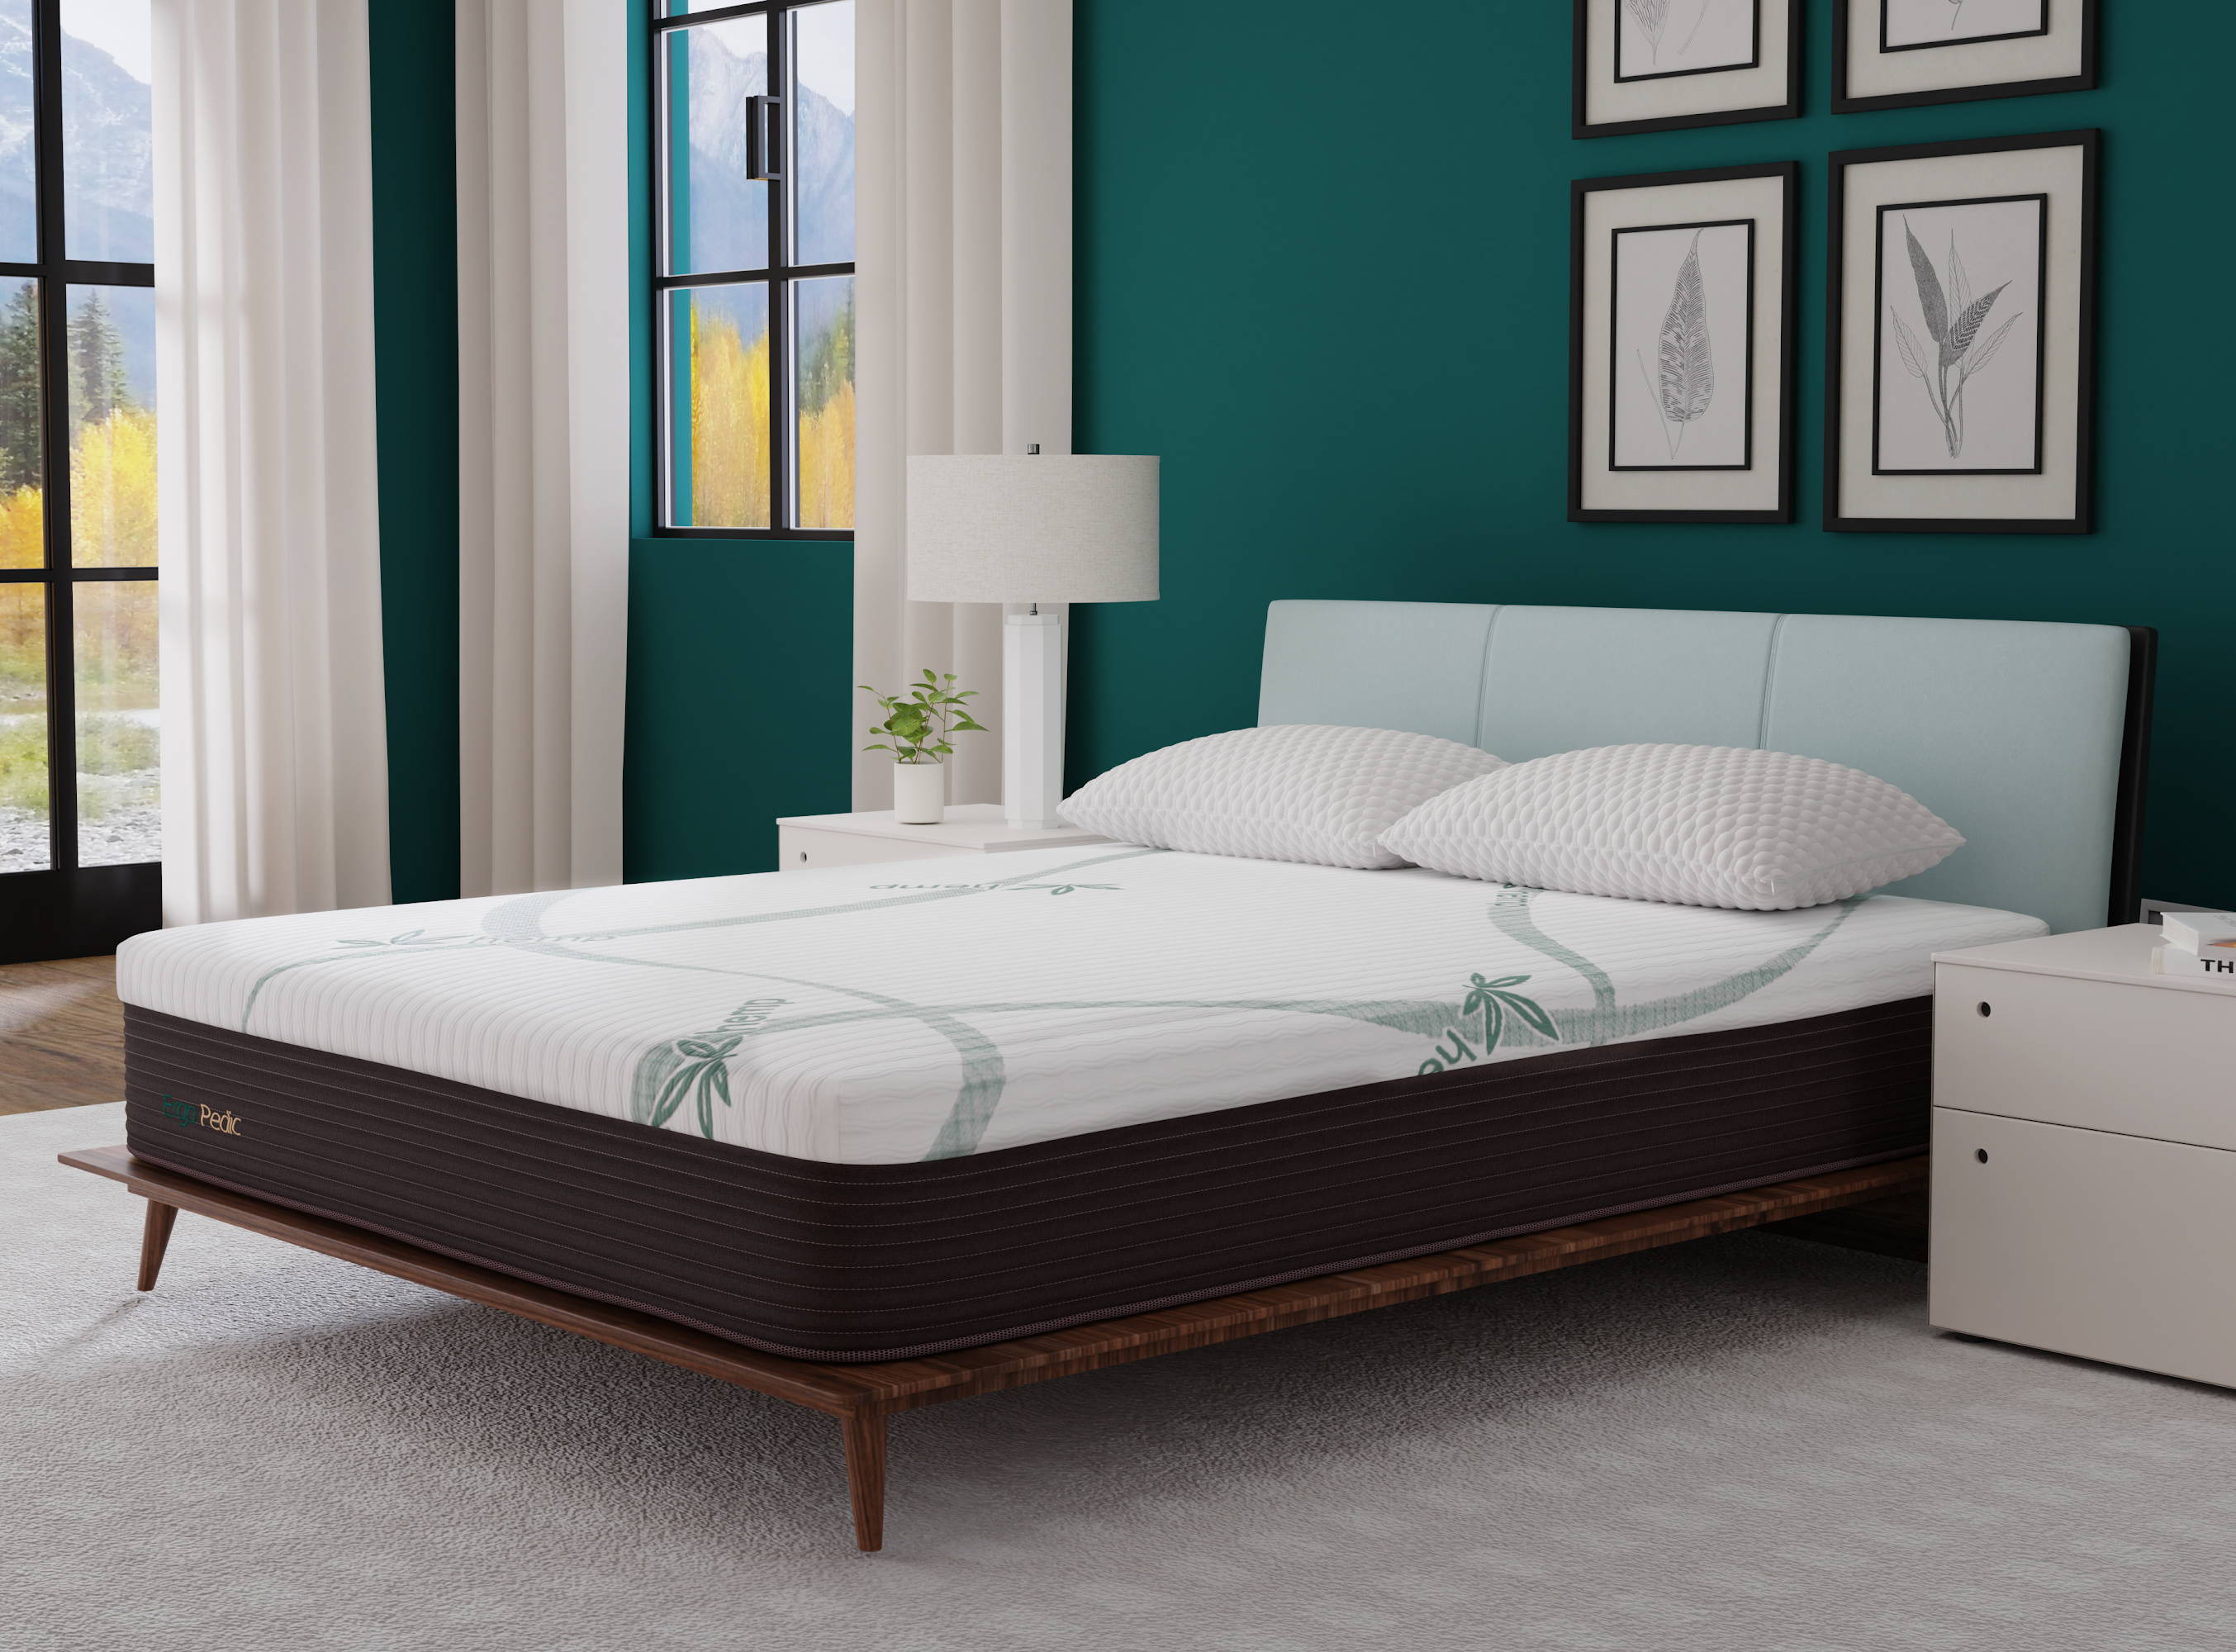 Calming CBD ZenCloud Original memory foam mattress in a bedroom on a platform bed with teal walls.